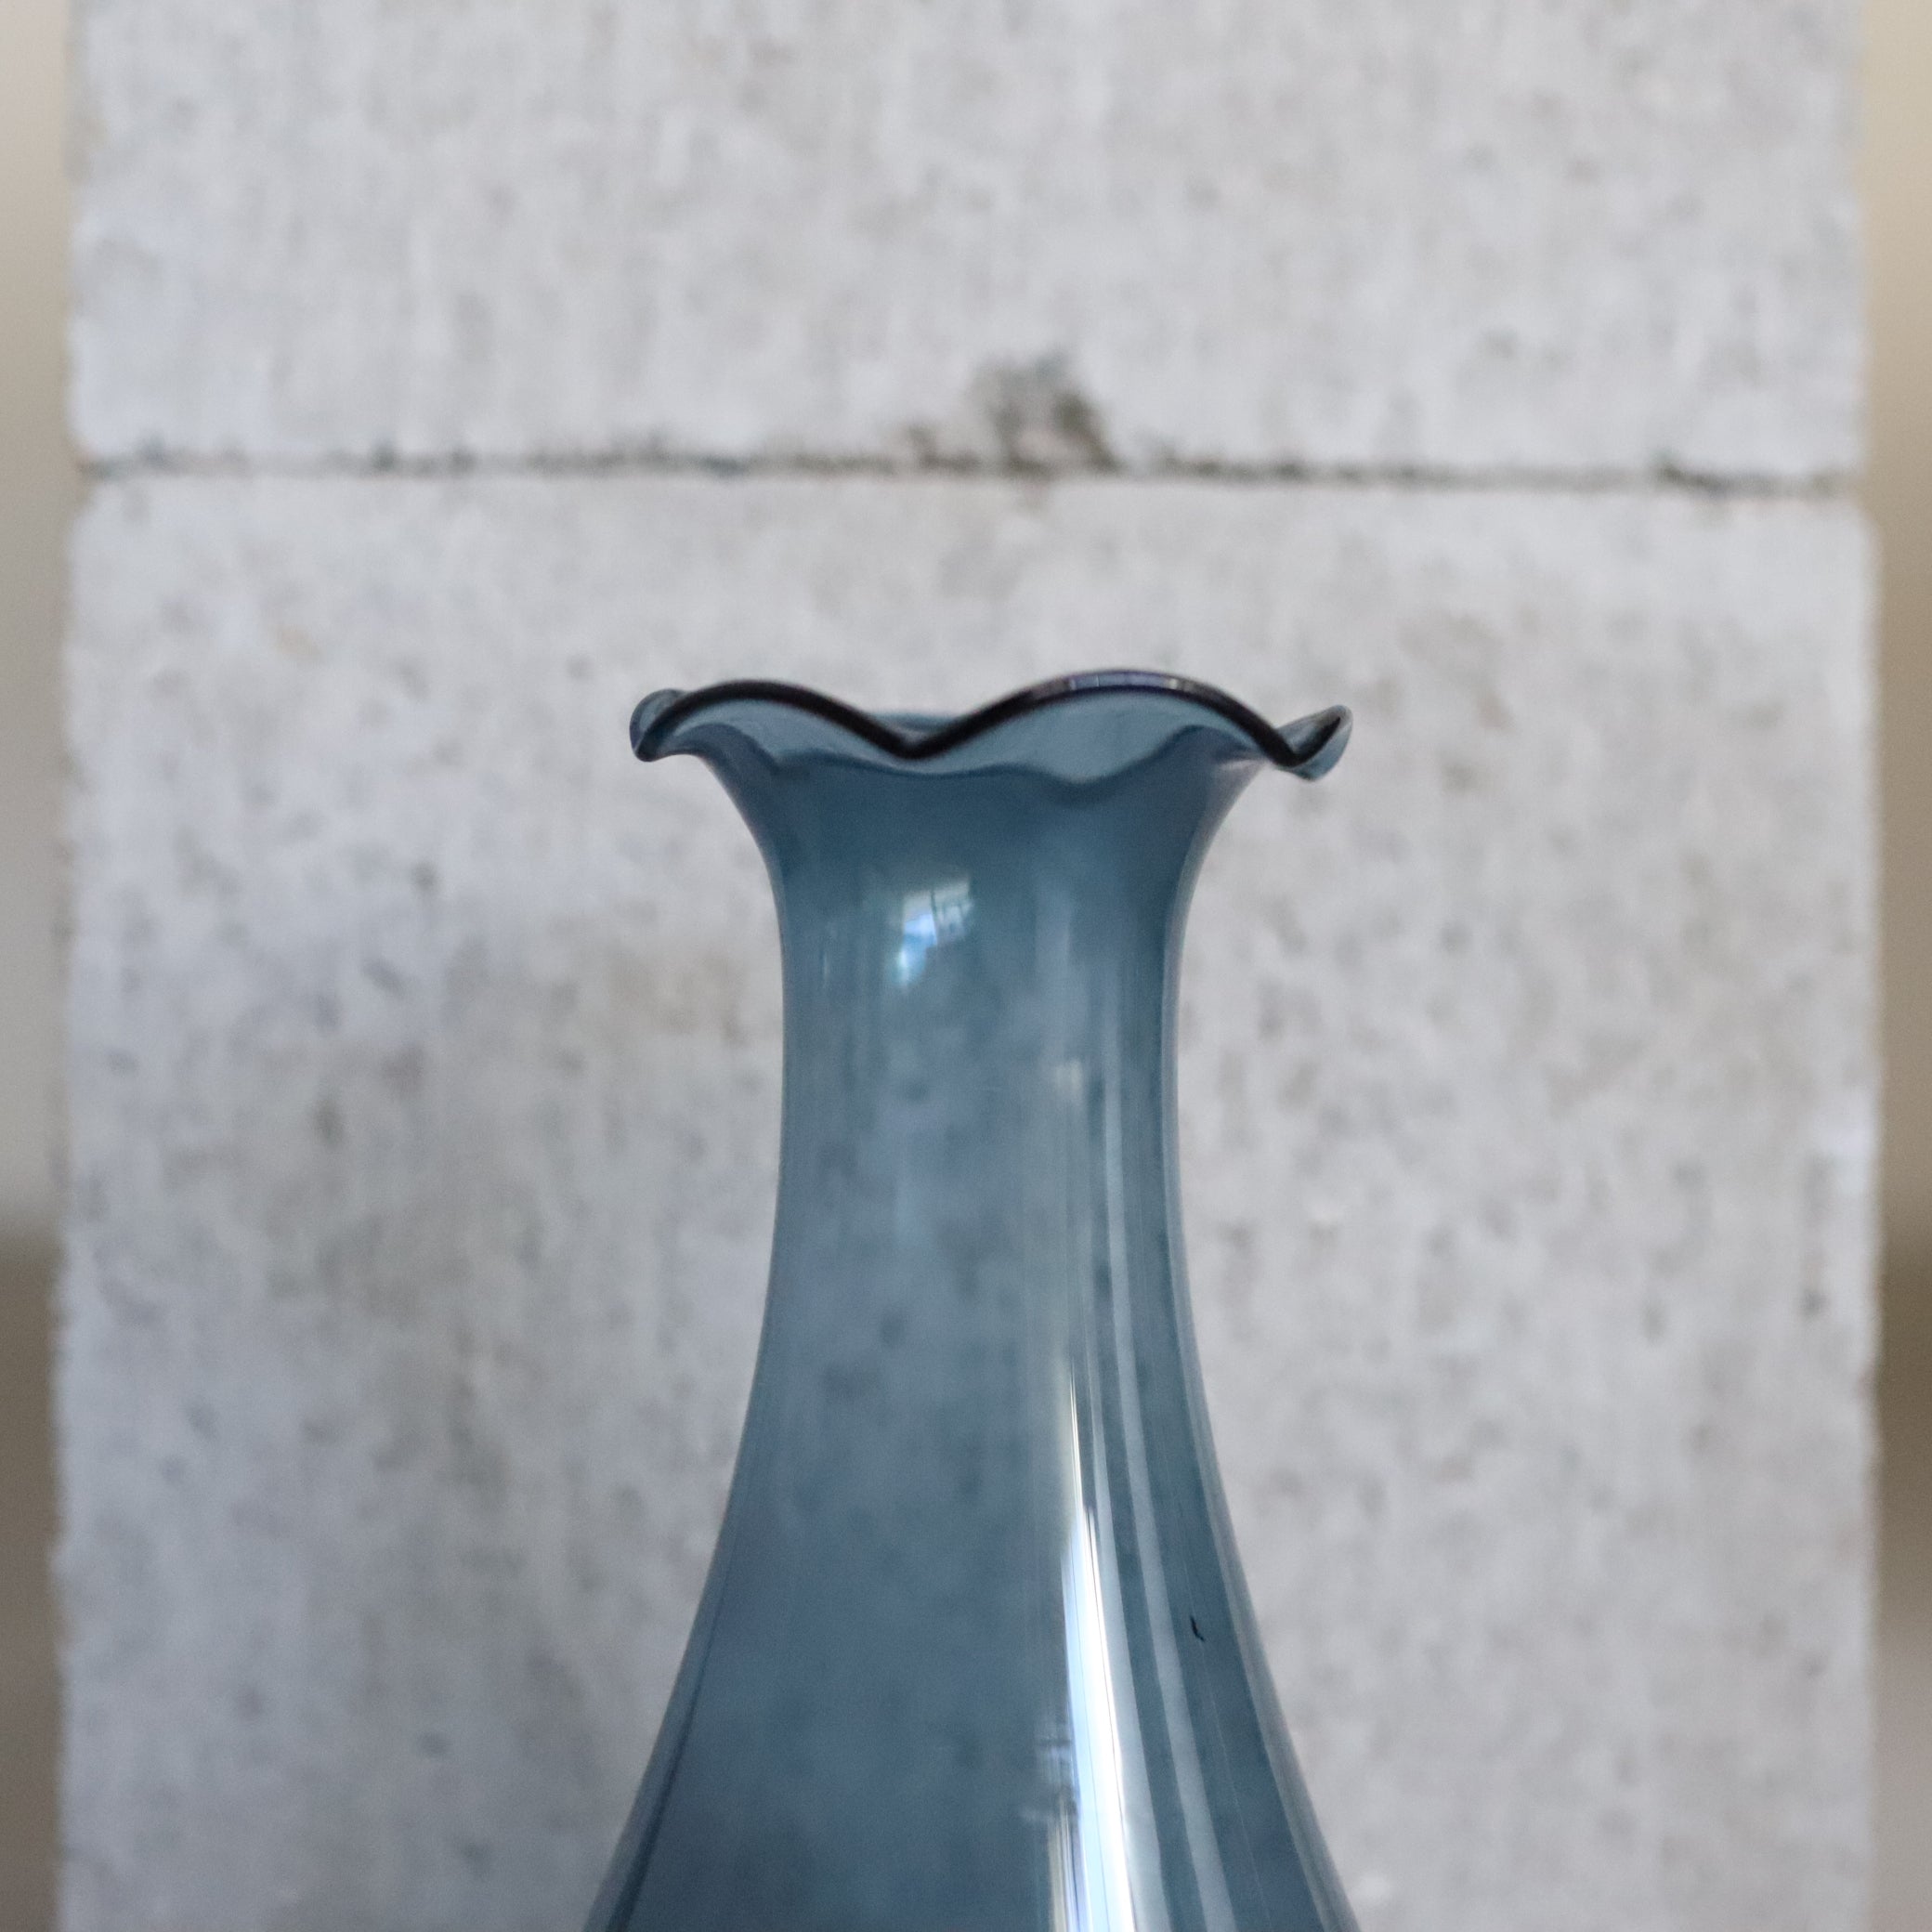 Vintage vase #35